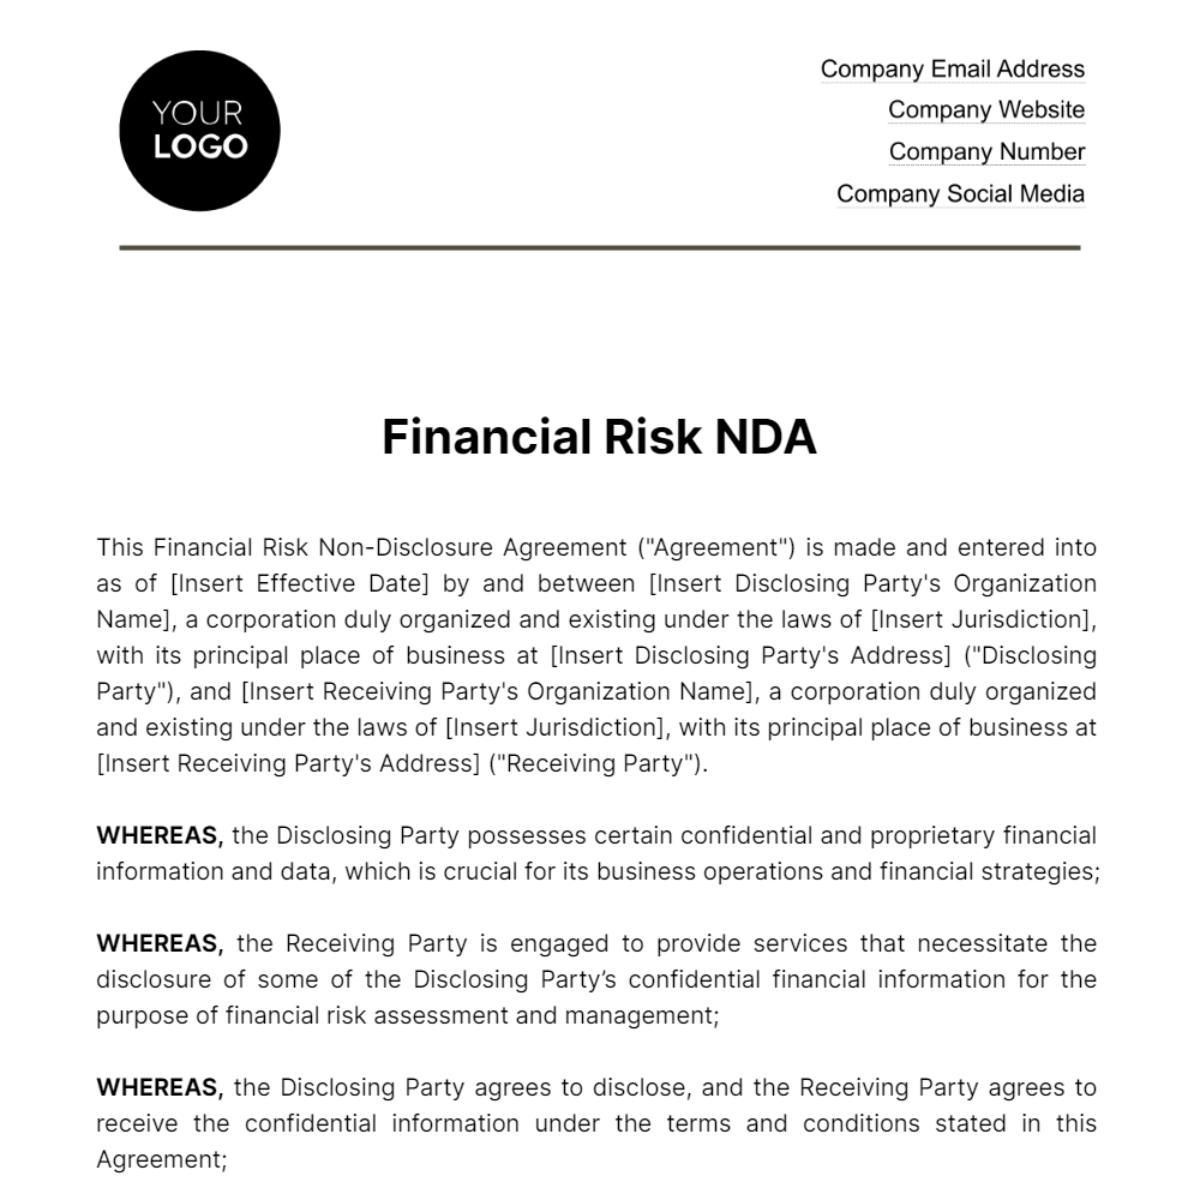 Financial Risk NDA Template